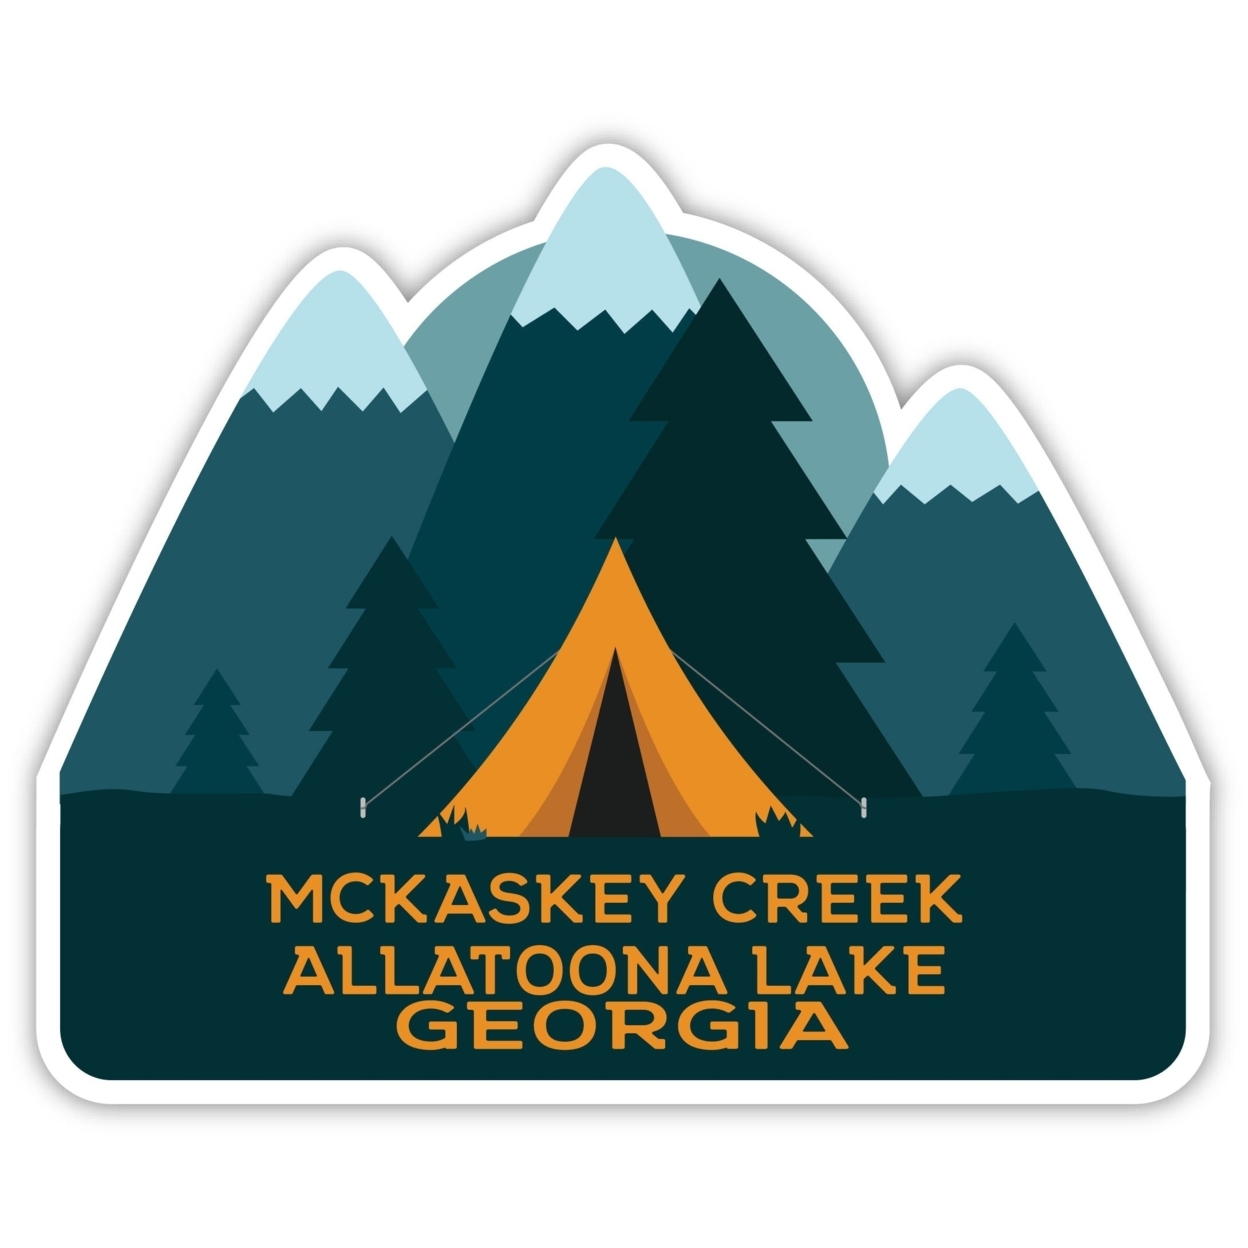 Mckaskey Creek Allatoona Lake Georgia Souvenir Decorative Stickers (Choose Theme And Size) - 4-Inch, Tent